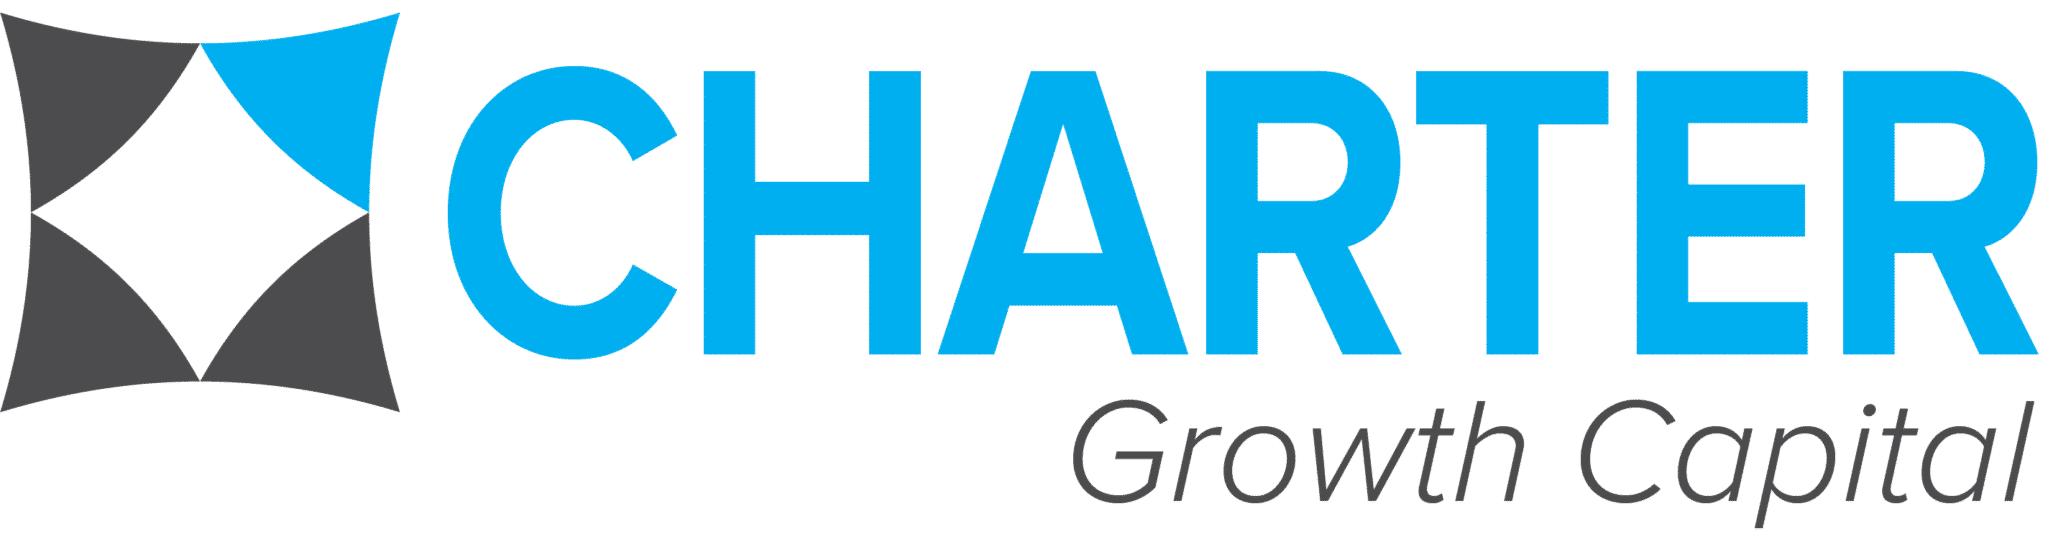 Charter Growth Capital